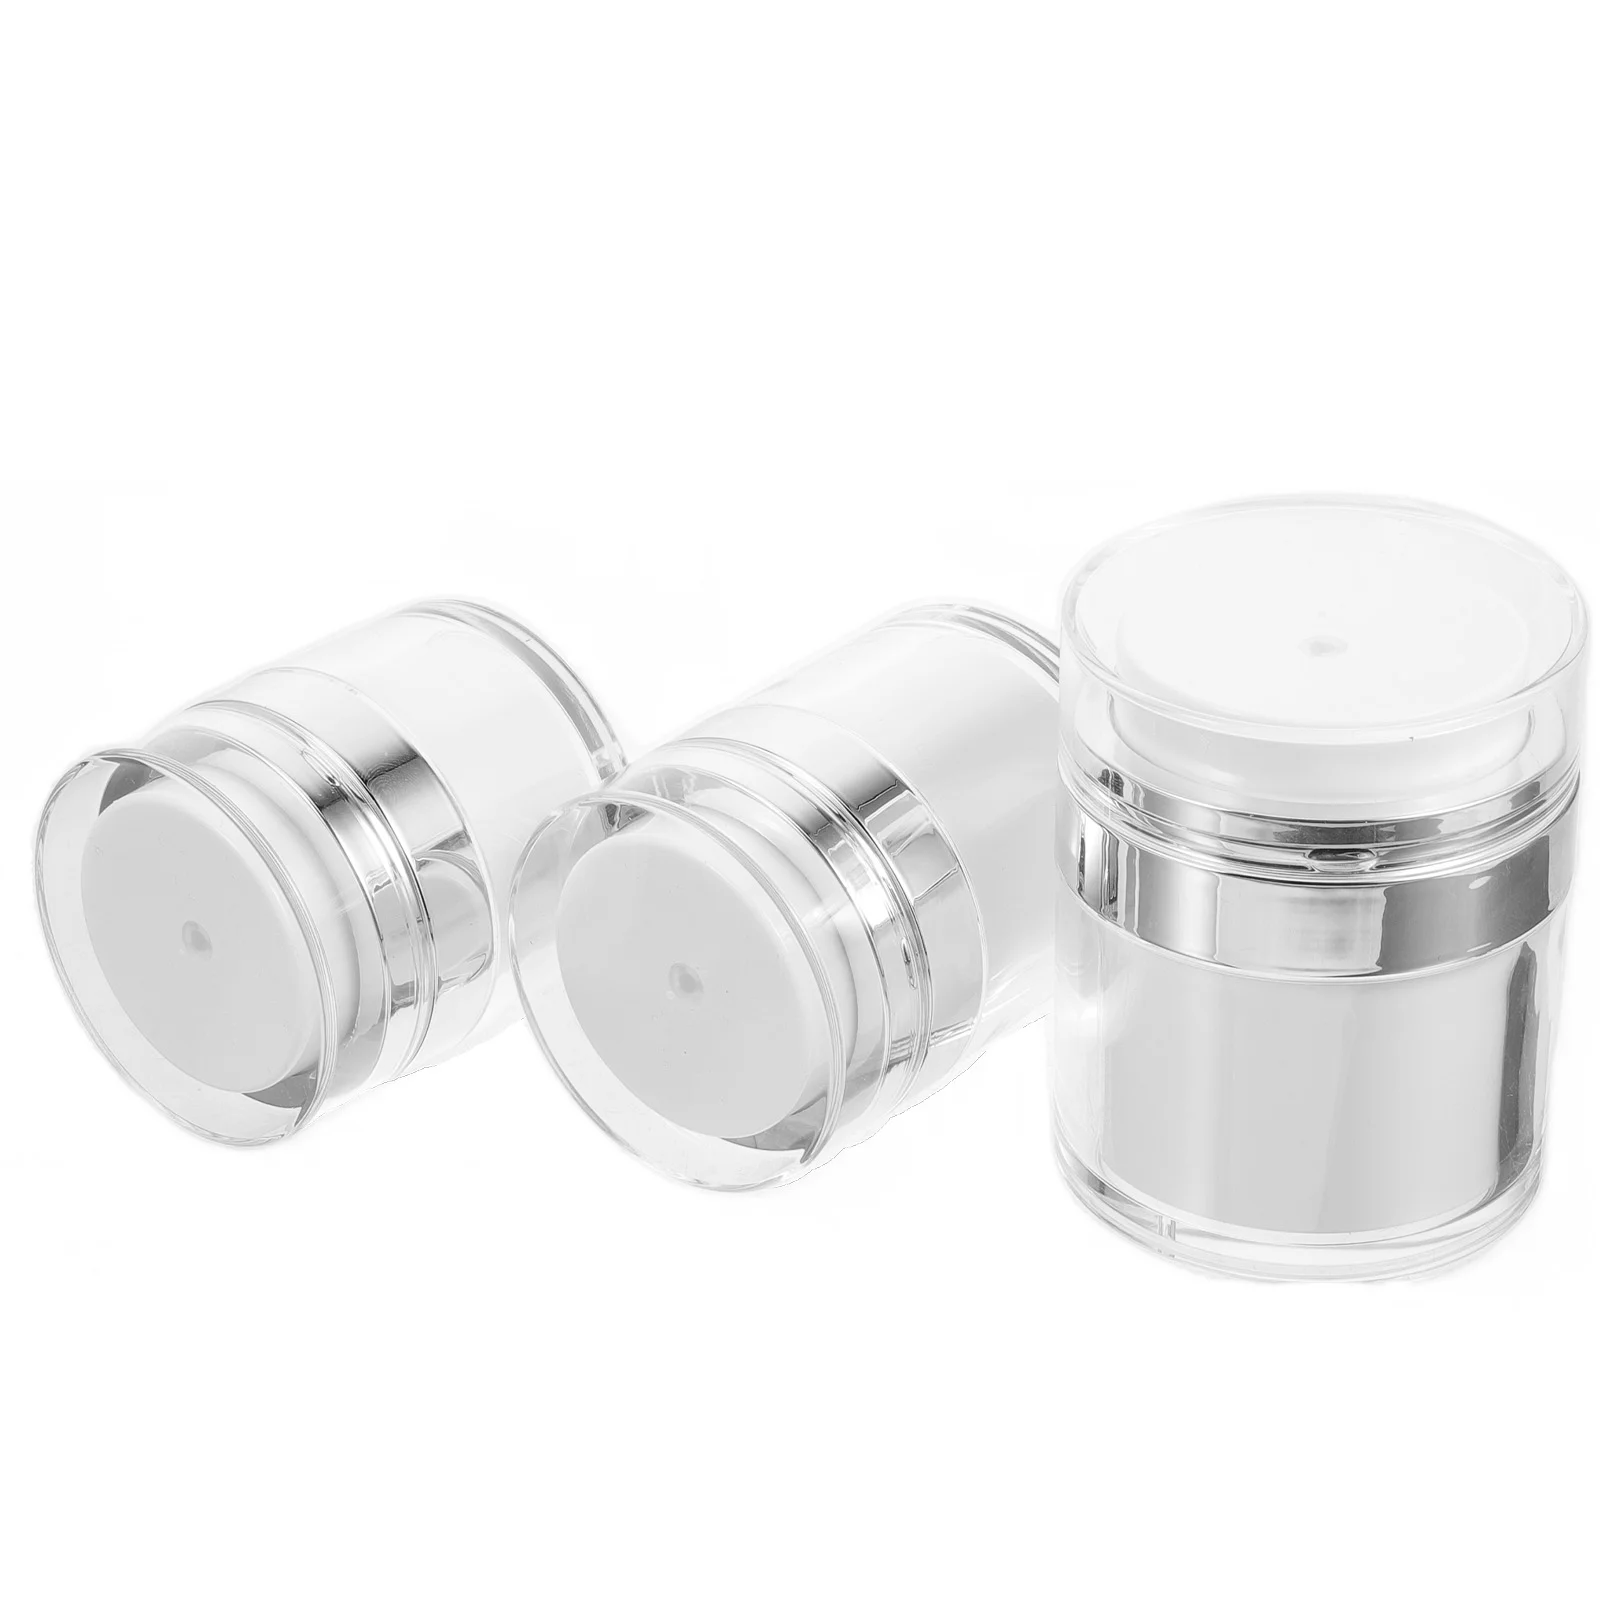 

3 Pcs Vacuum Cream Jar Empty Sub Bottle Makeup Travel Containers Toiletries Leakproof Creams Lotion Portable Toiletry Bottles